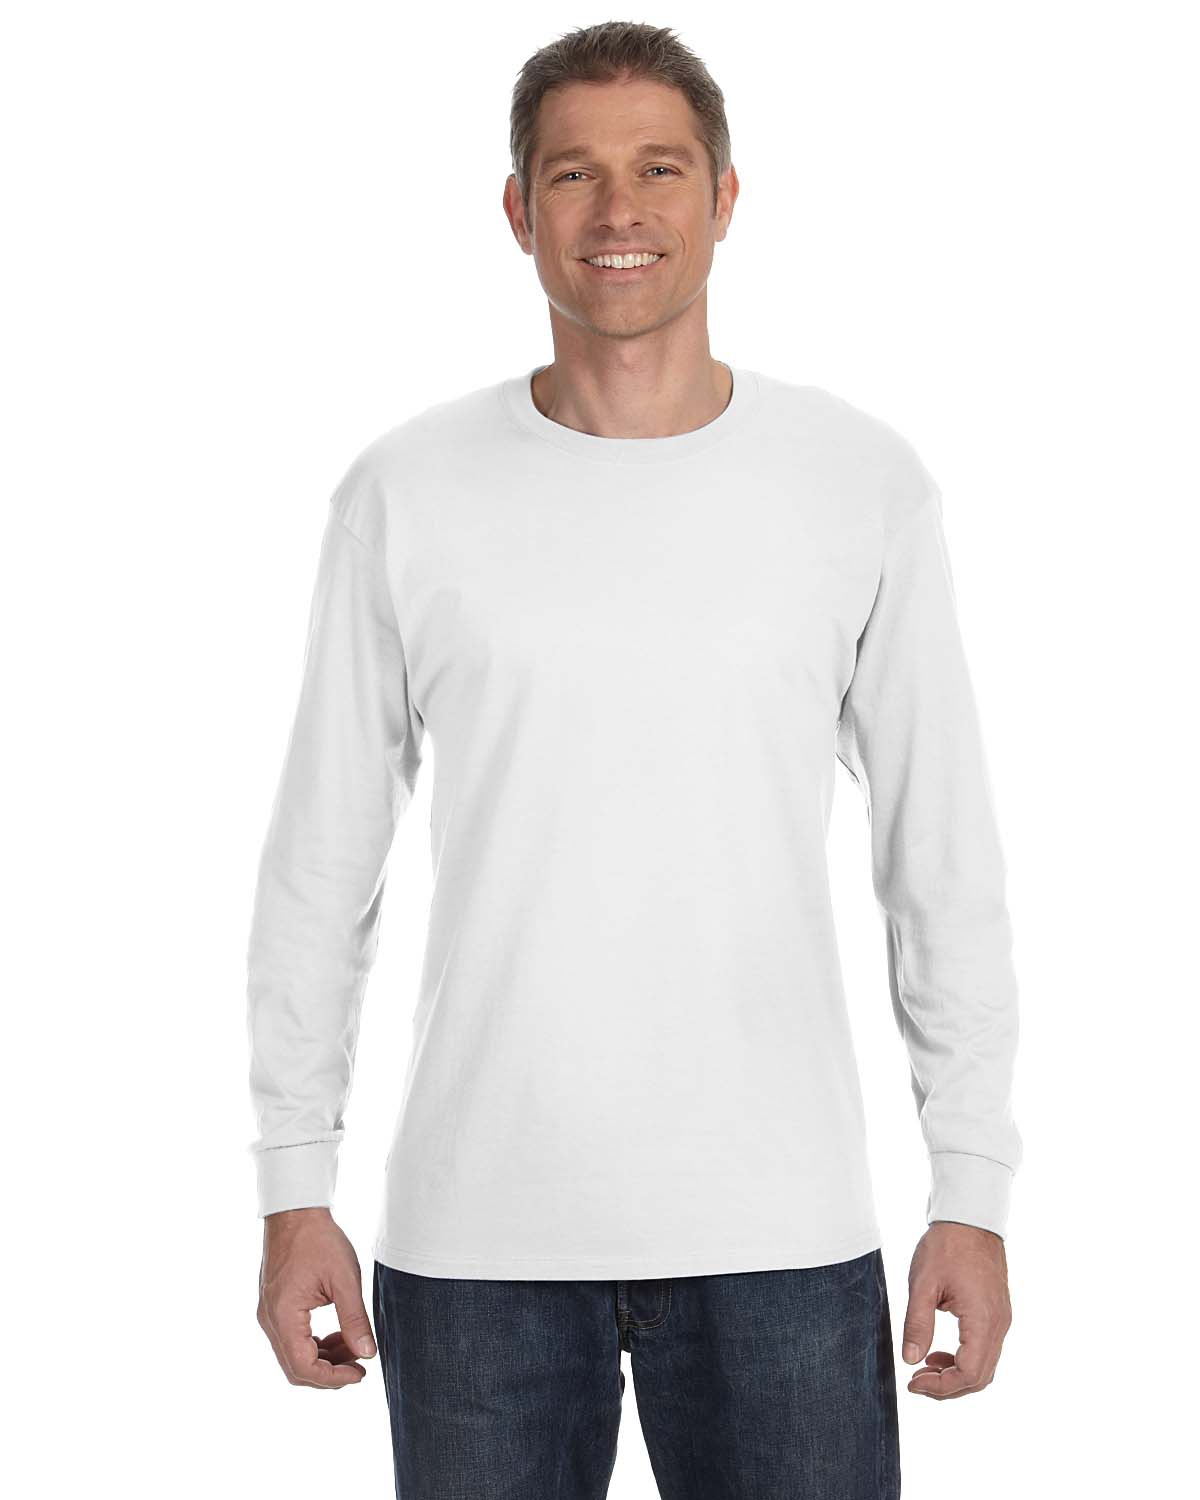 'Hanes 5586 Men's Tagless Soft Long Sleeve T-Shirt'